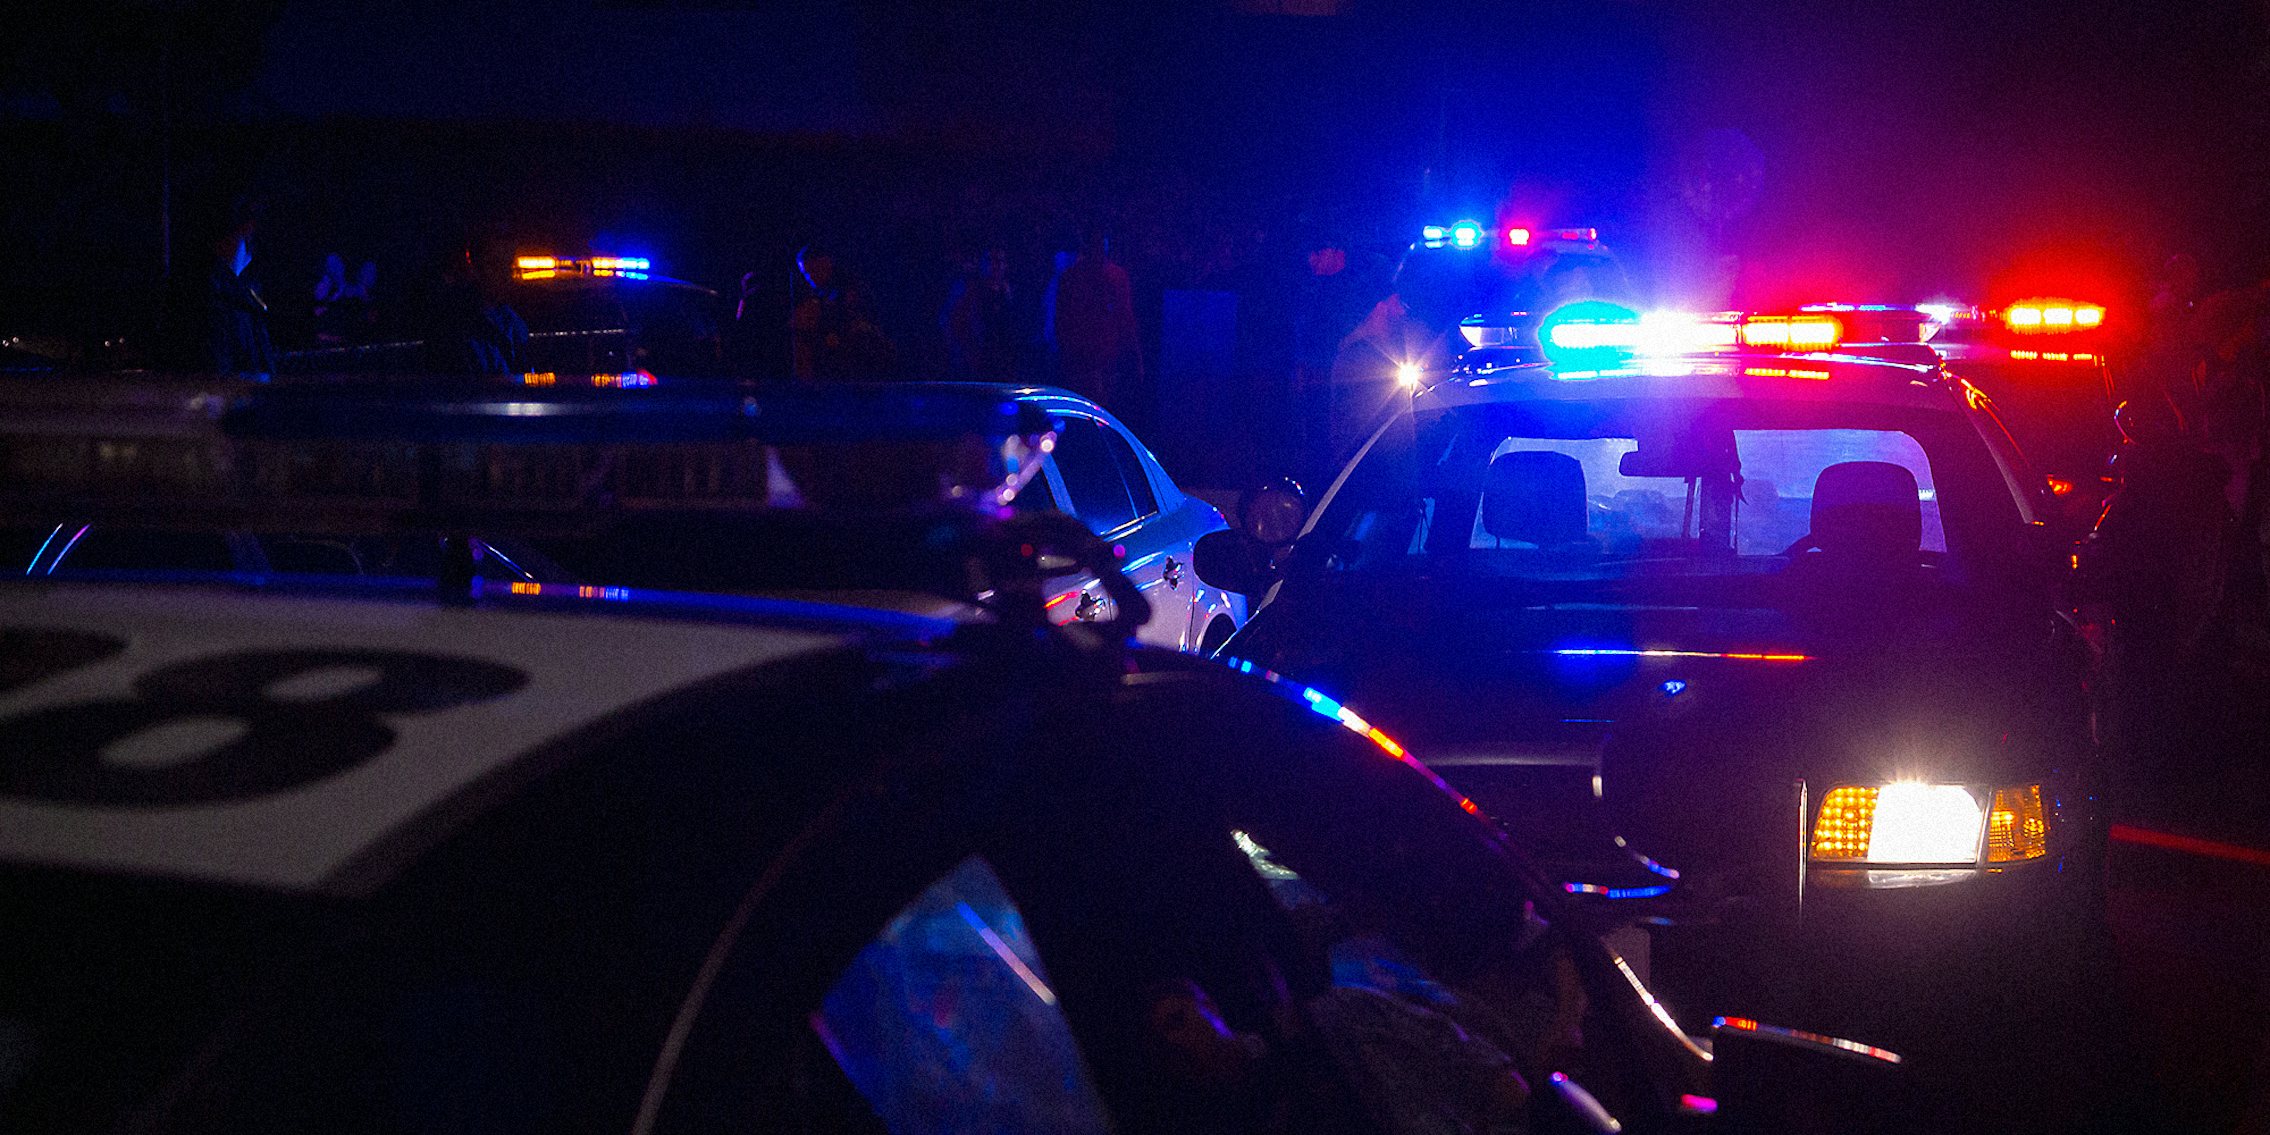 Flashing lights on a police car.